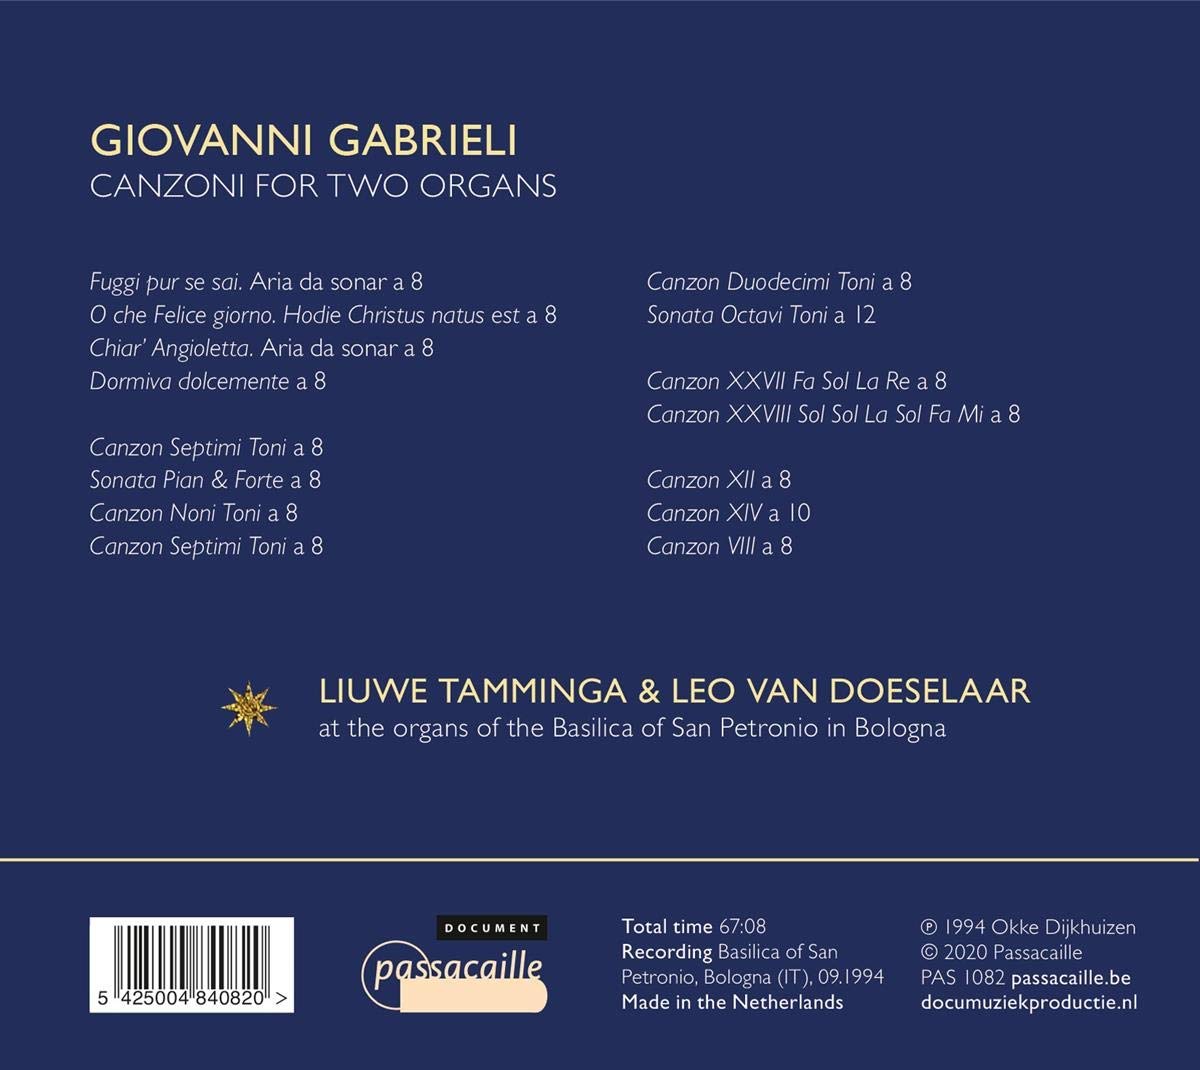 Liuwe Tamminga 조반니 가브리엘리: 두 대의 오르간을 위한 칸초나 (Giovanni Gabrieli: Canzoni for Two Organs) 